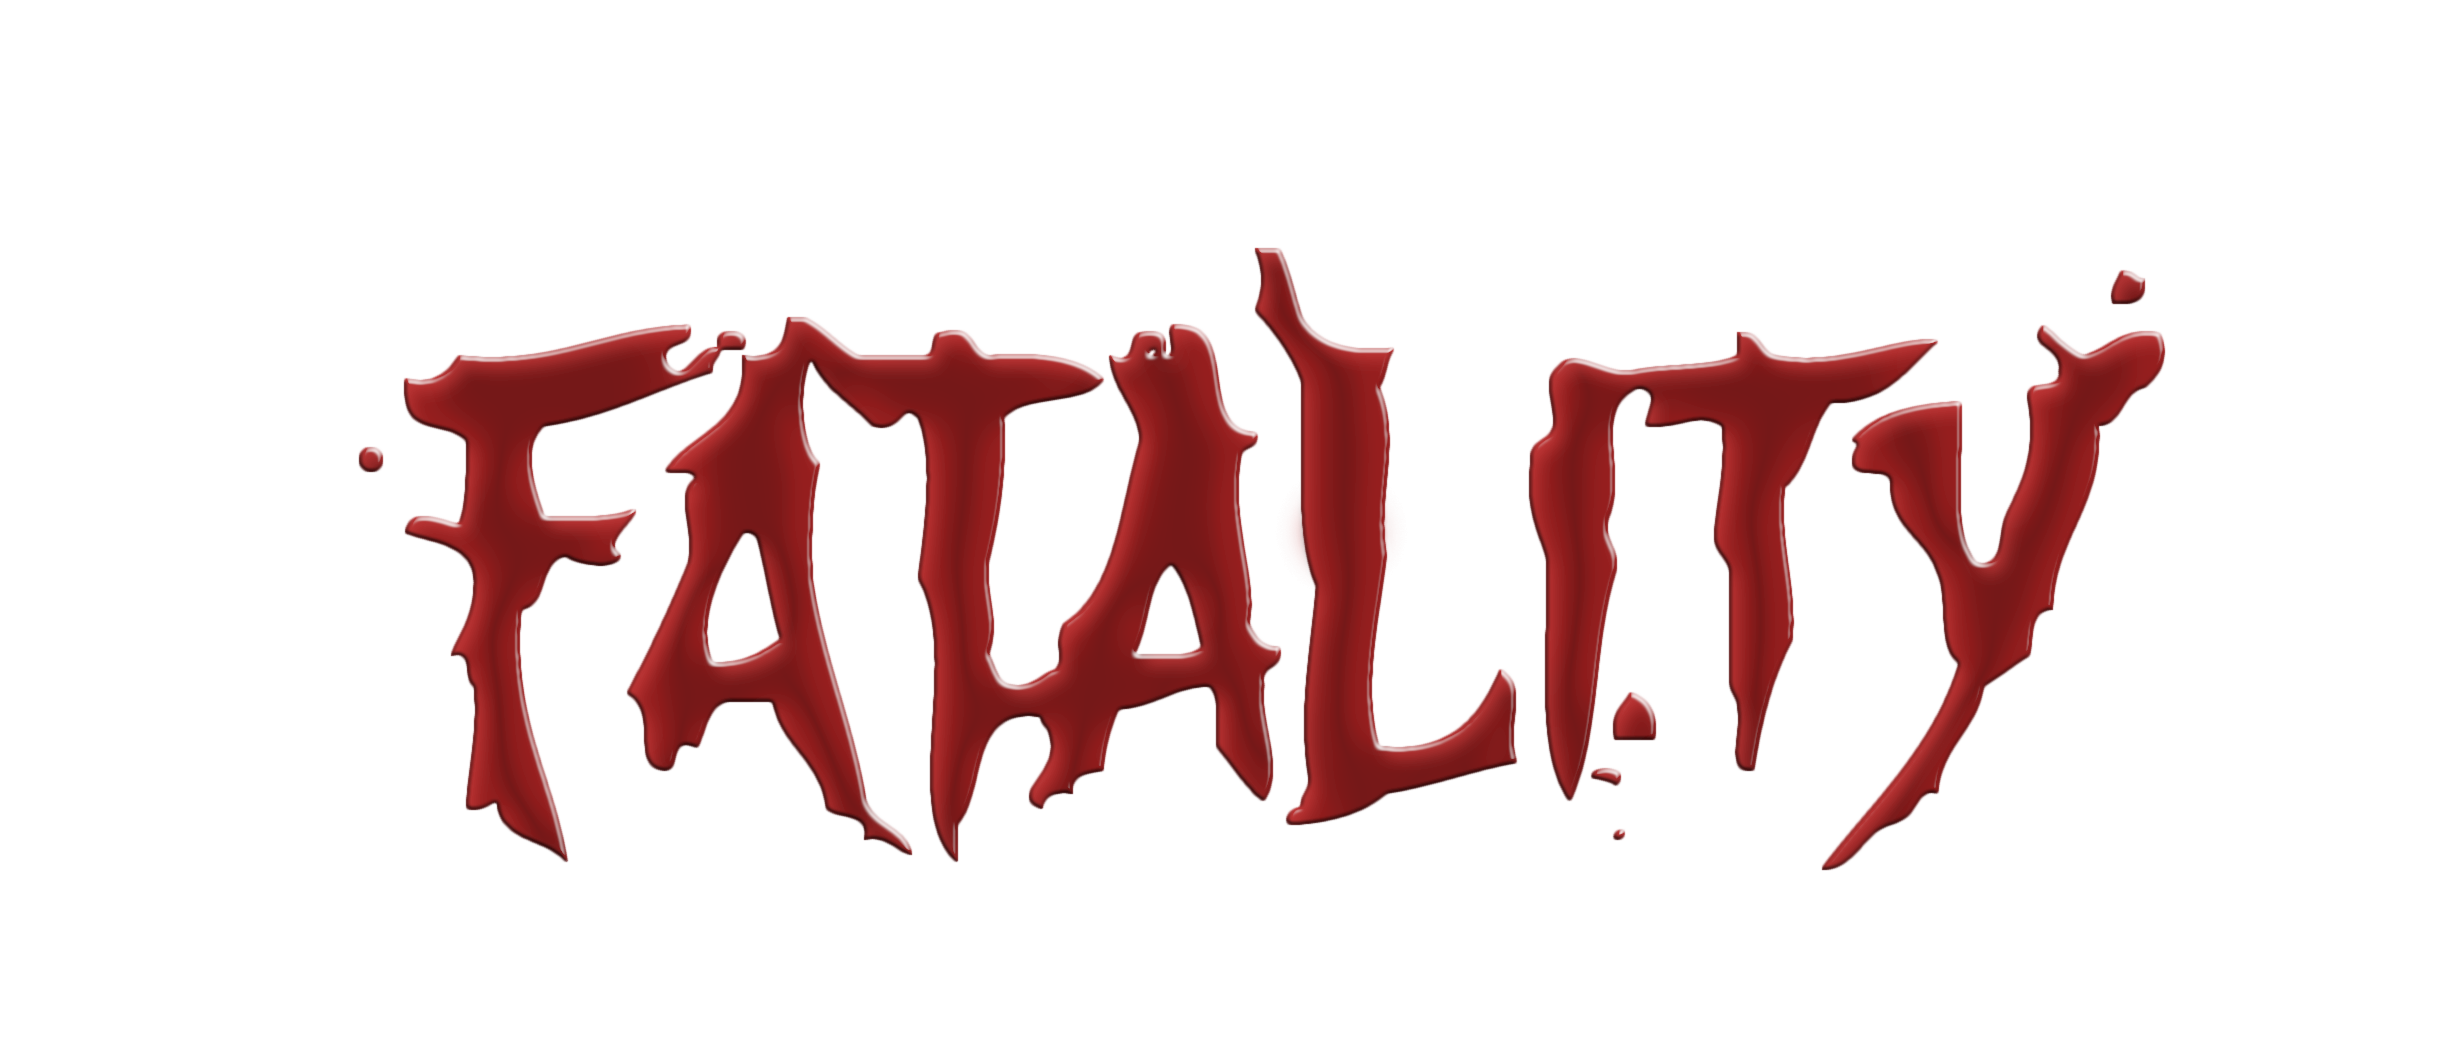 fatality_logo_mk_9_by_barakaldo-d3f7n4x.